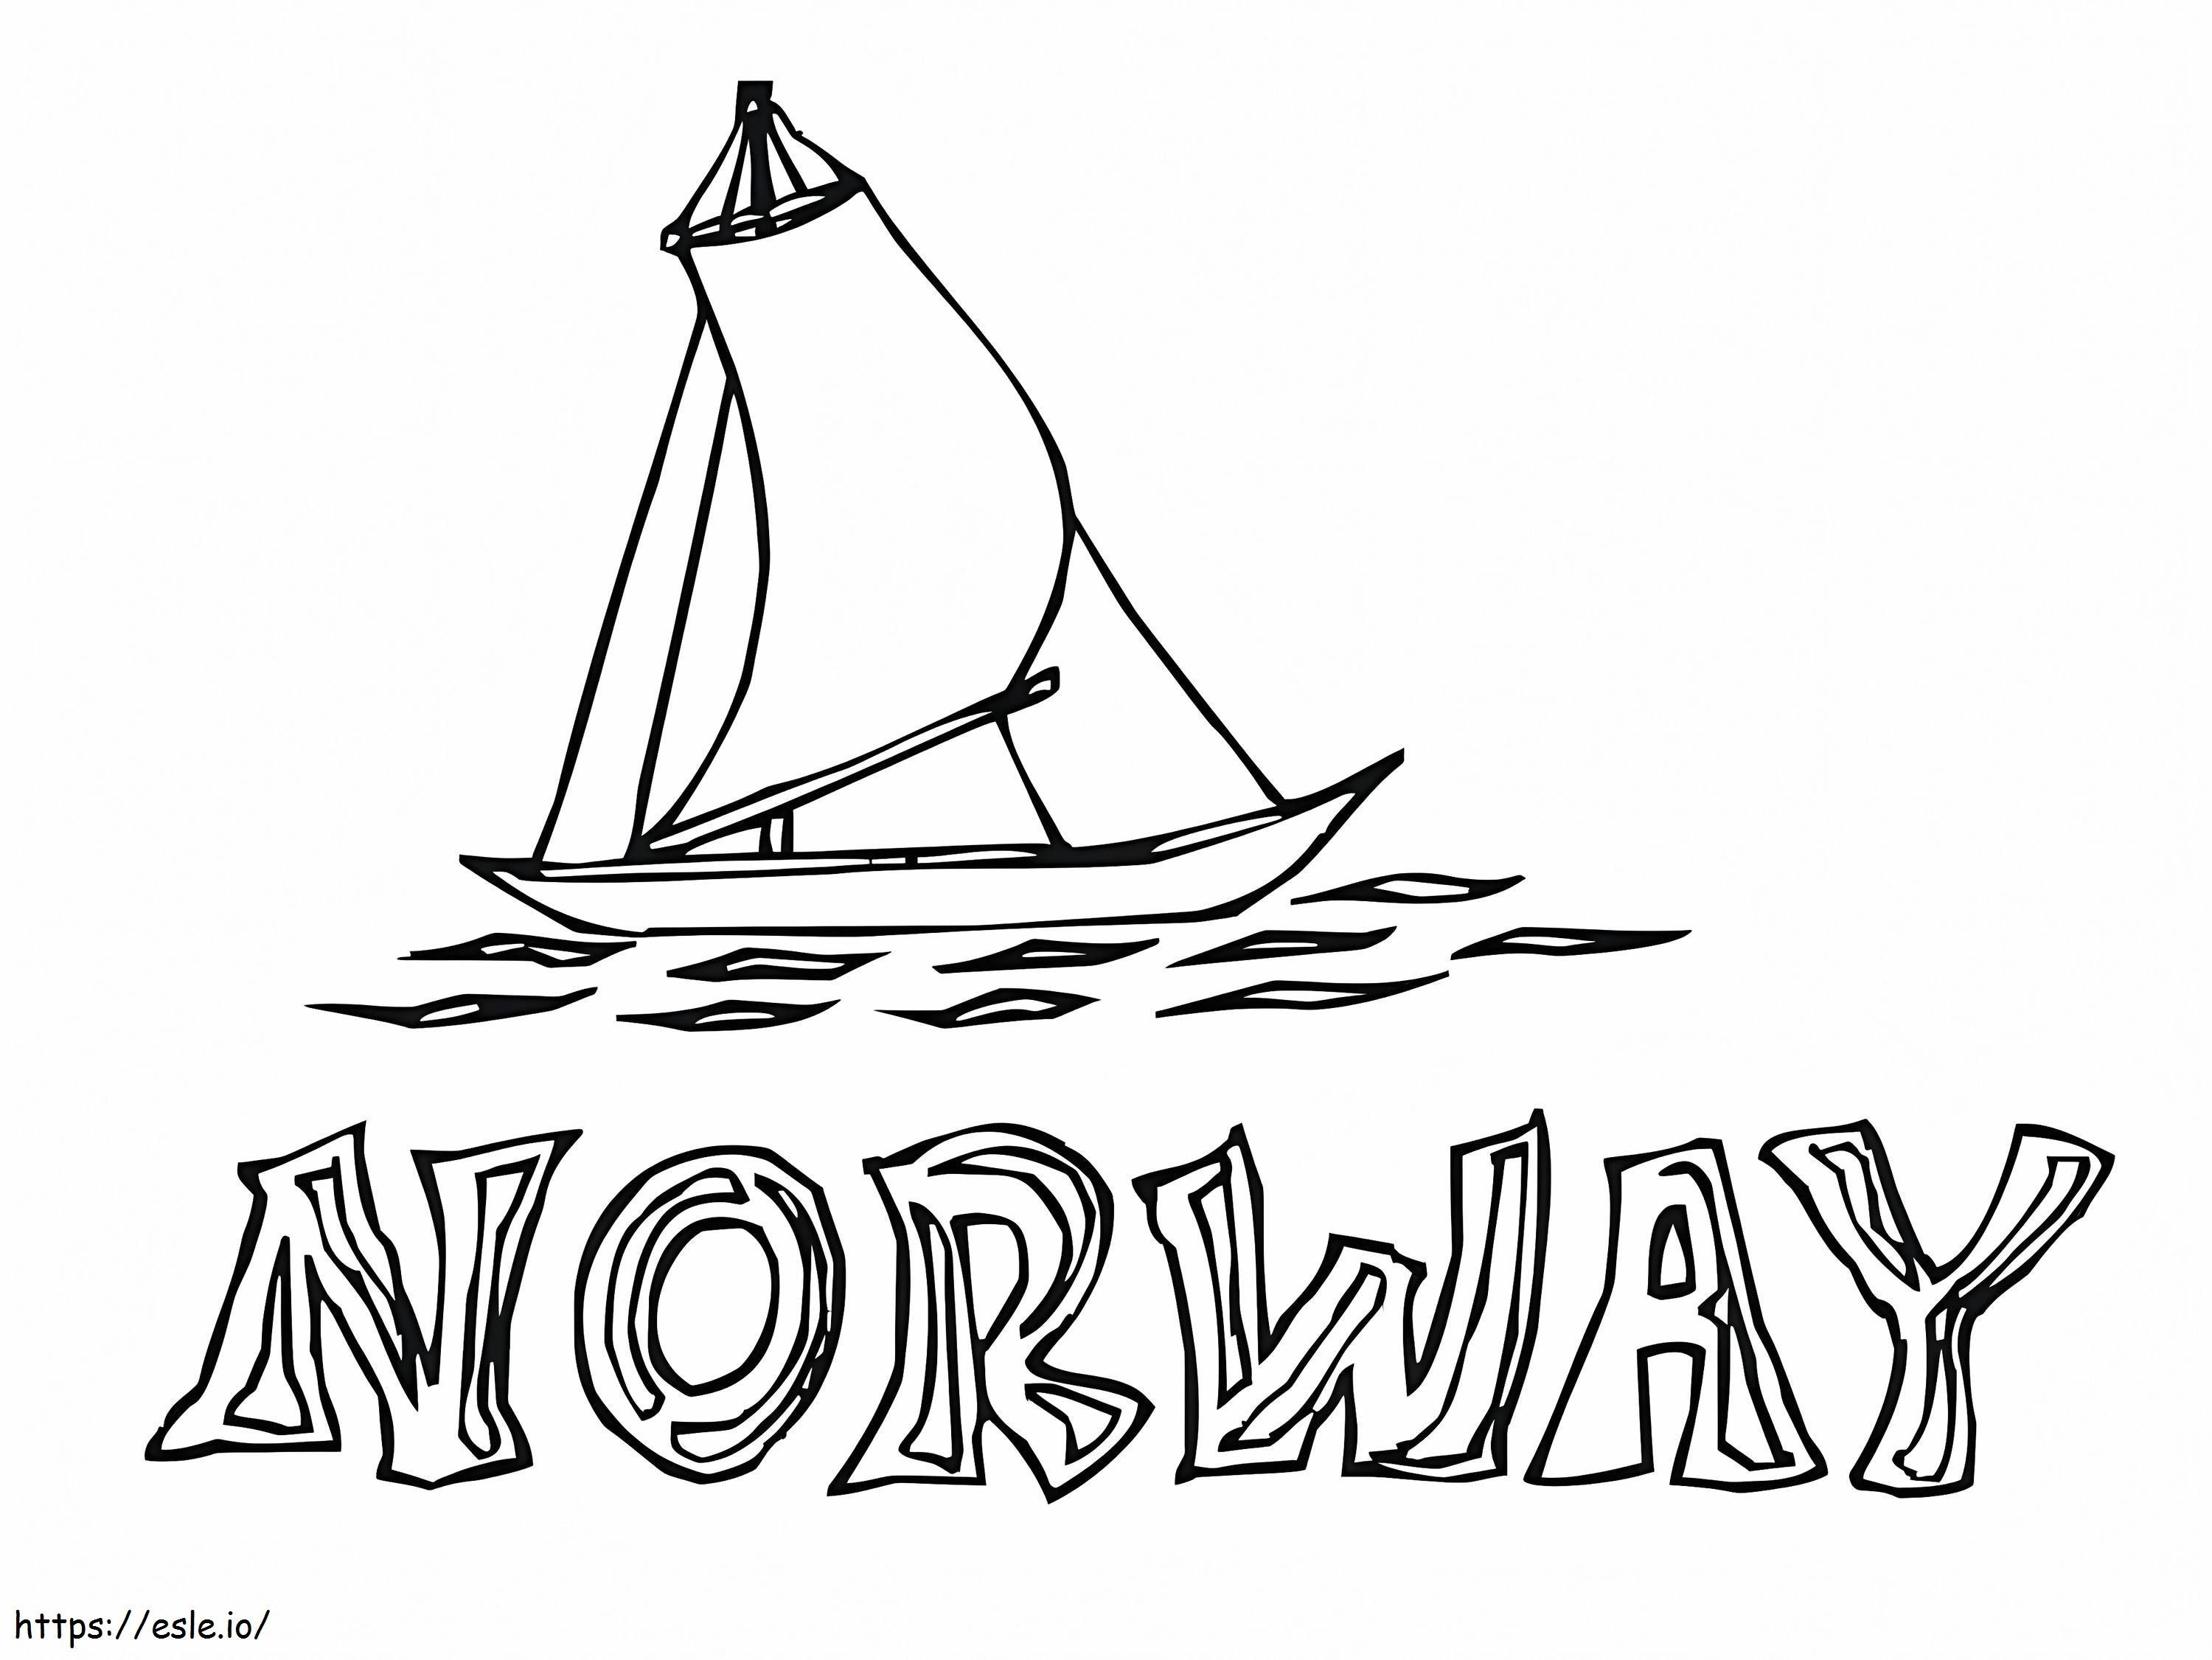 Nordland Boat coloring page